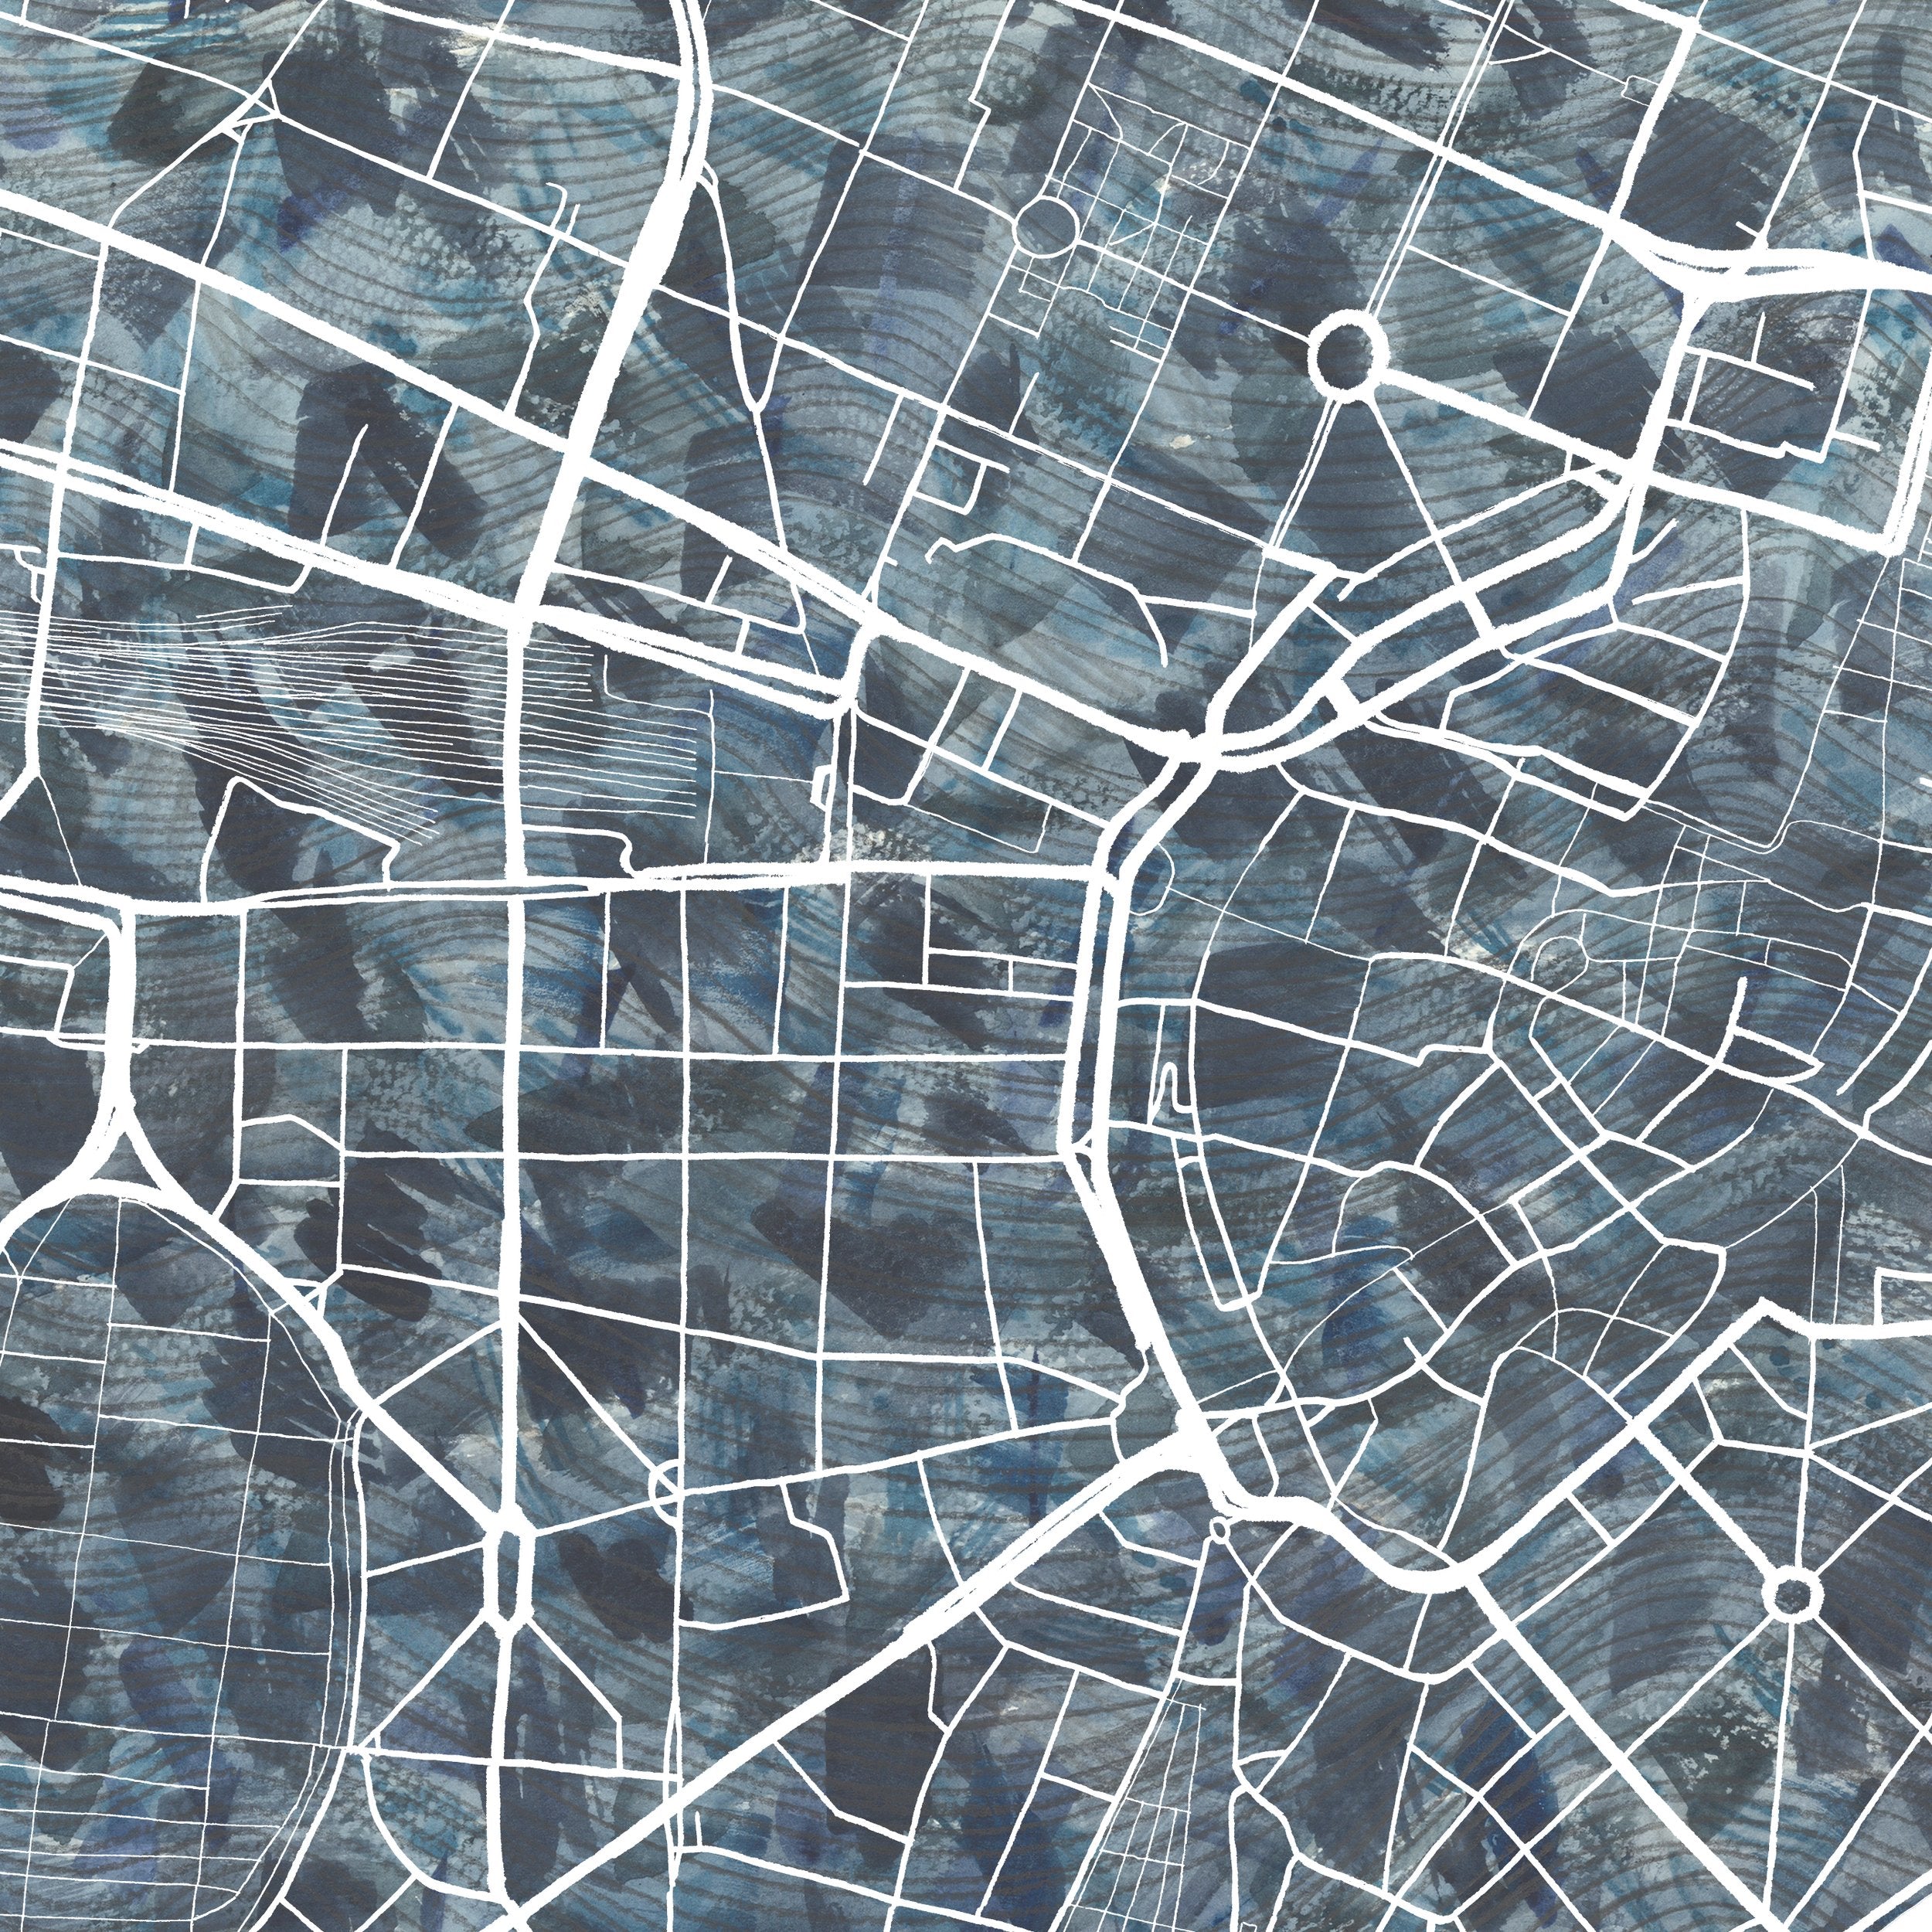 MUNICH Urban Fabrics City Map: PRINT